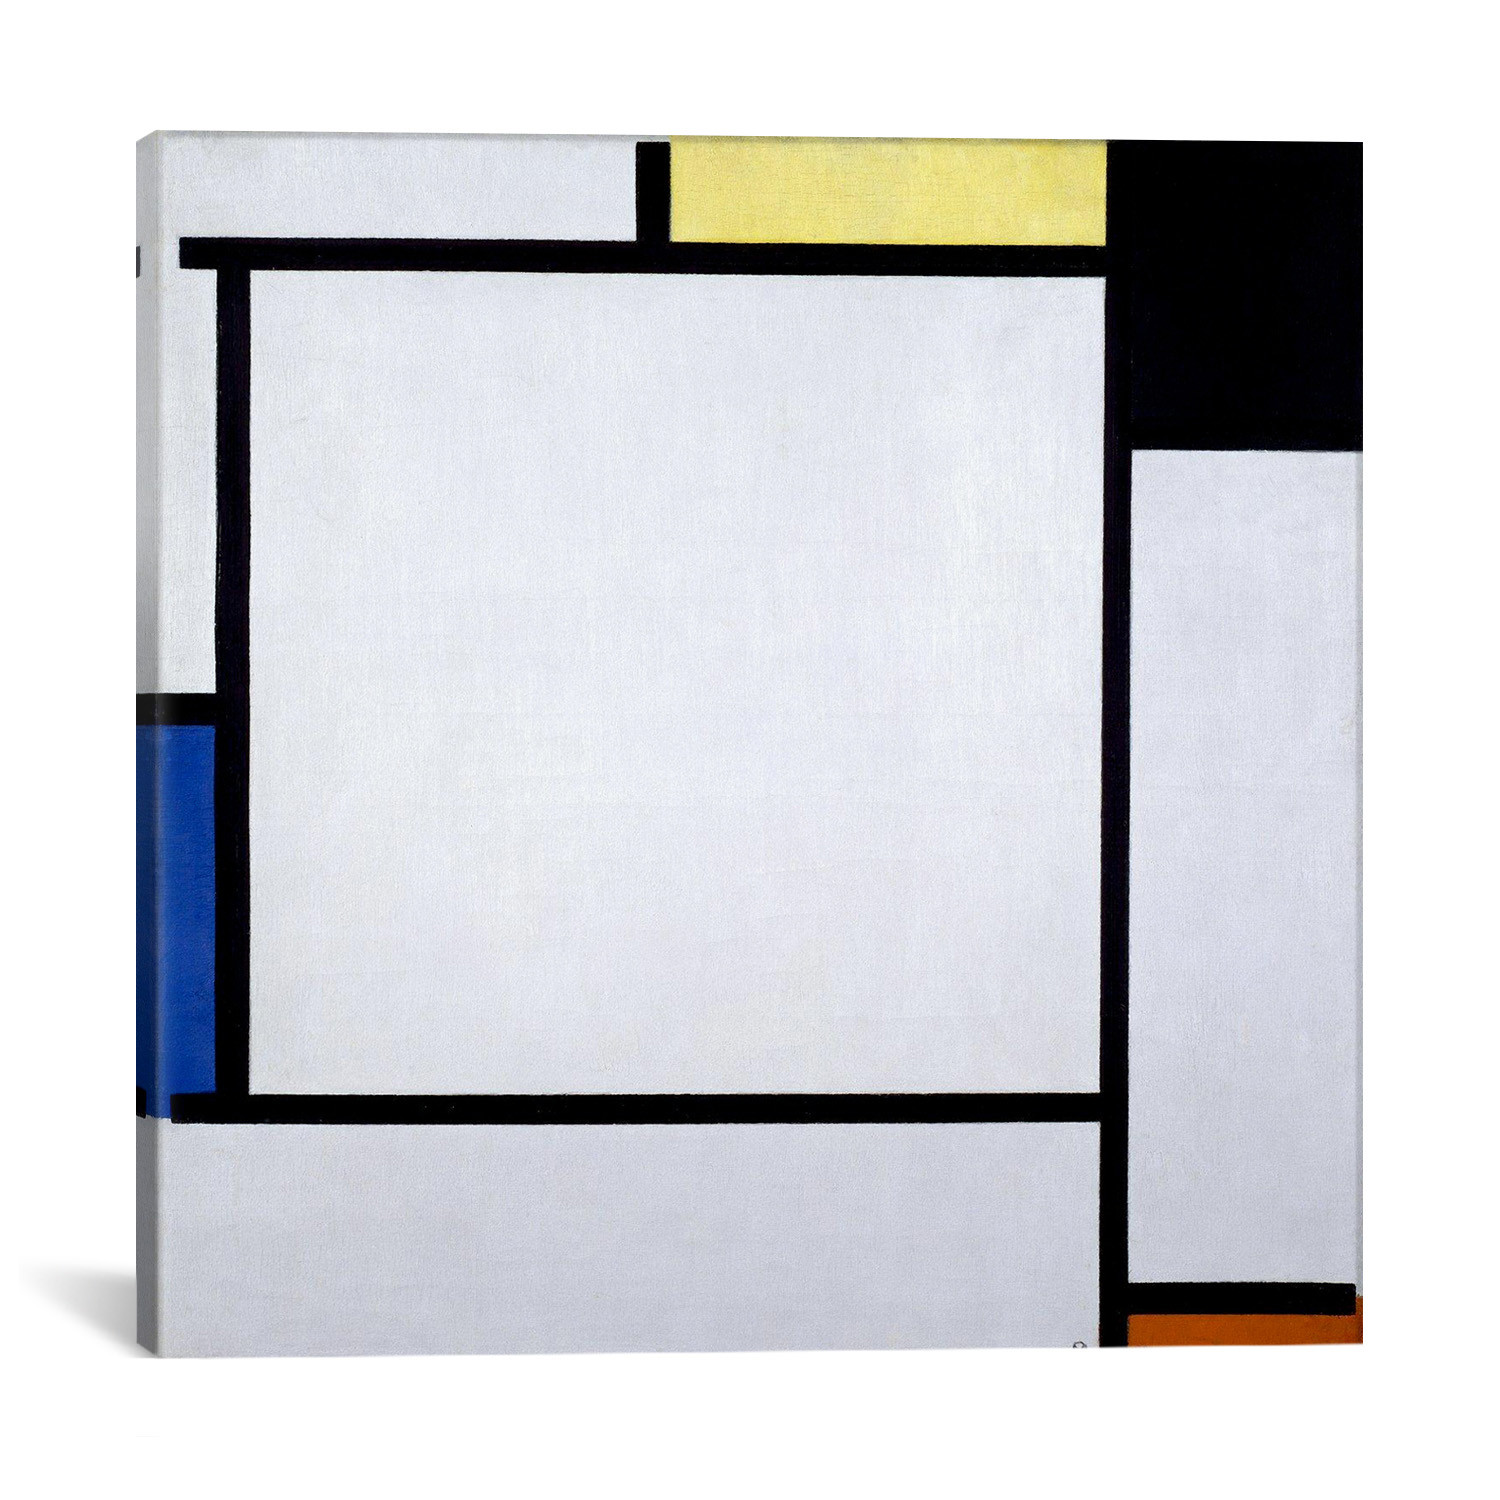 Composition ll // Piet Mondrian (18